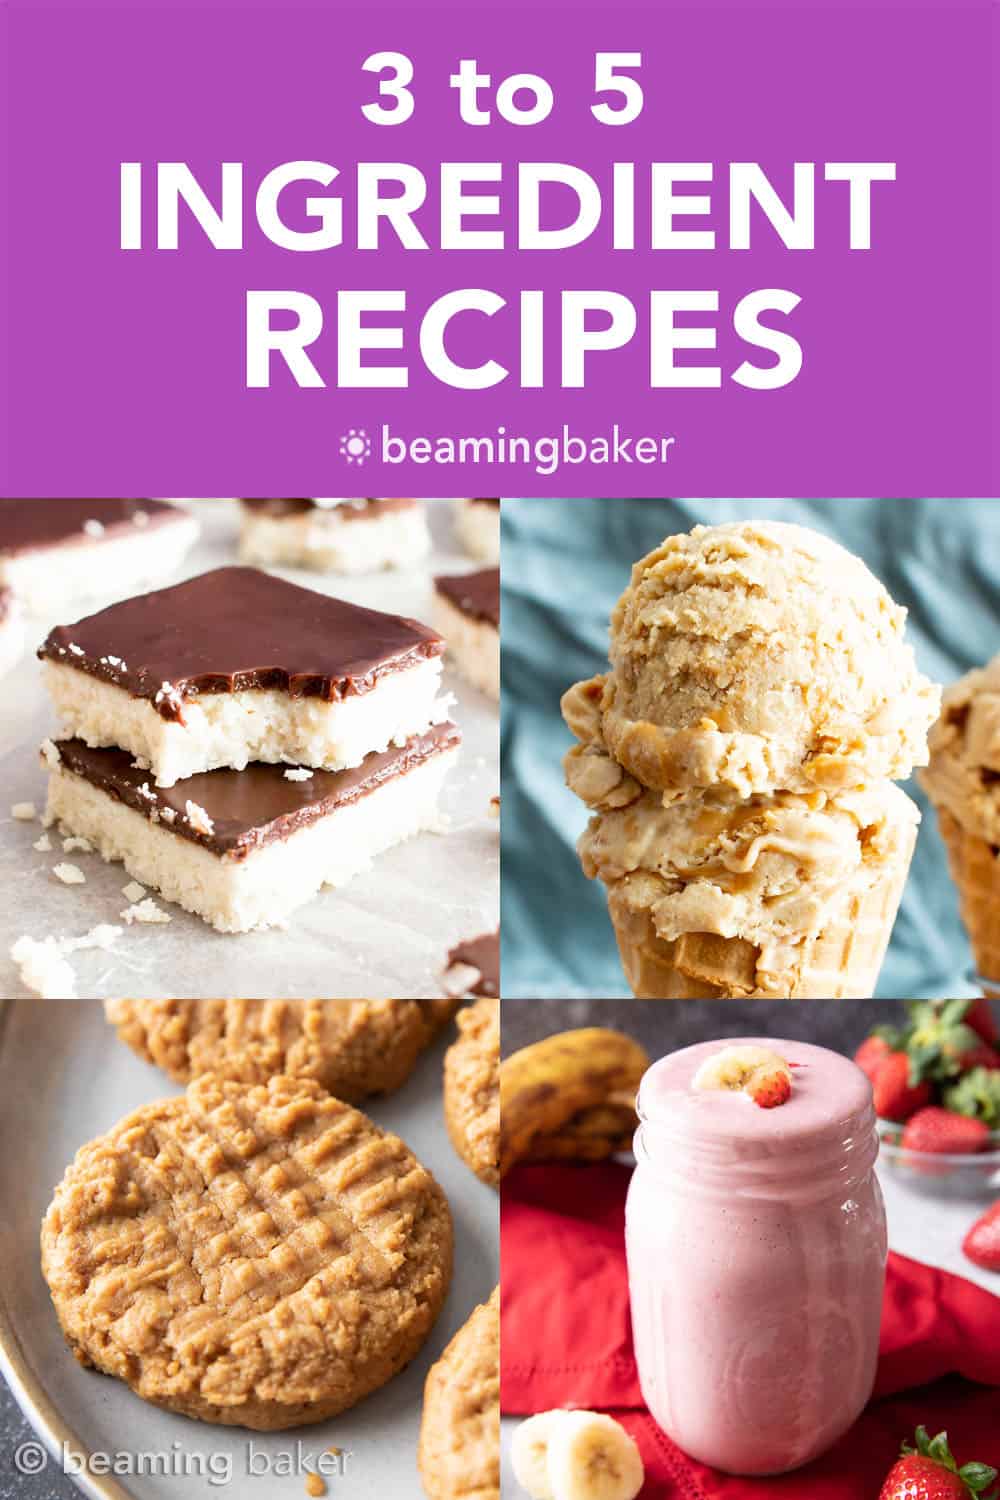 3 to 5 Ingredient Dessert Recipes: quick & easy 3 ingredient to 5 ingredient dessert recipes, from cookies and brownies to dessert bars, ice cream & cookie dough! Healthy, Vegan, Gluten Free, Dairy-Free. #EasyDesserts #3Ingredient #5Ingredient #Vegan | Recipes at BeamingBaker.com